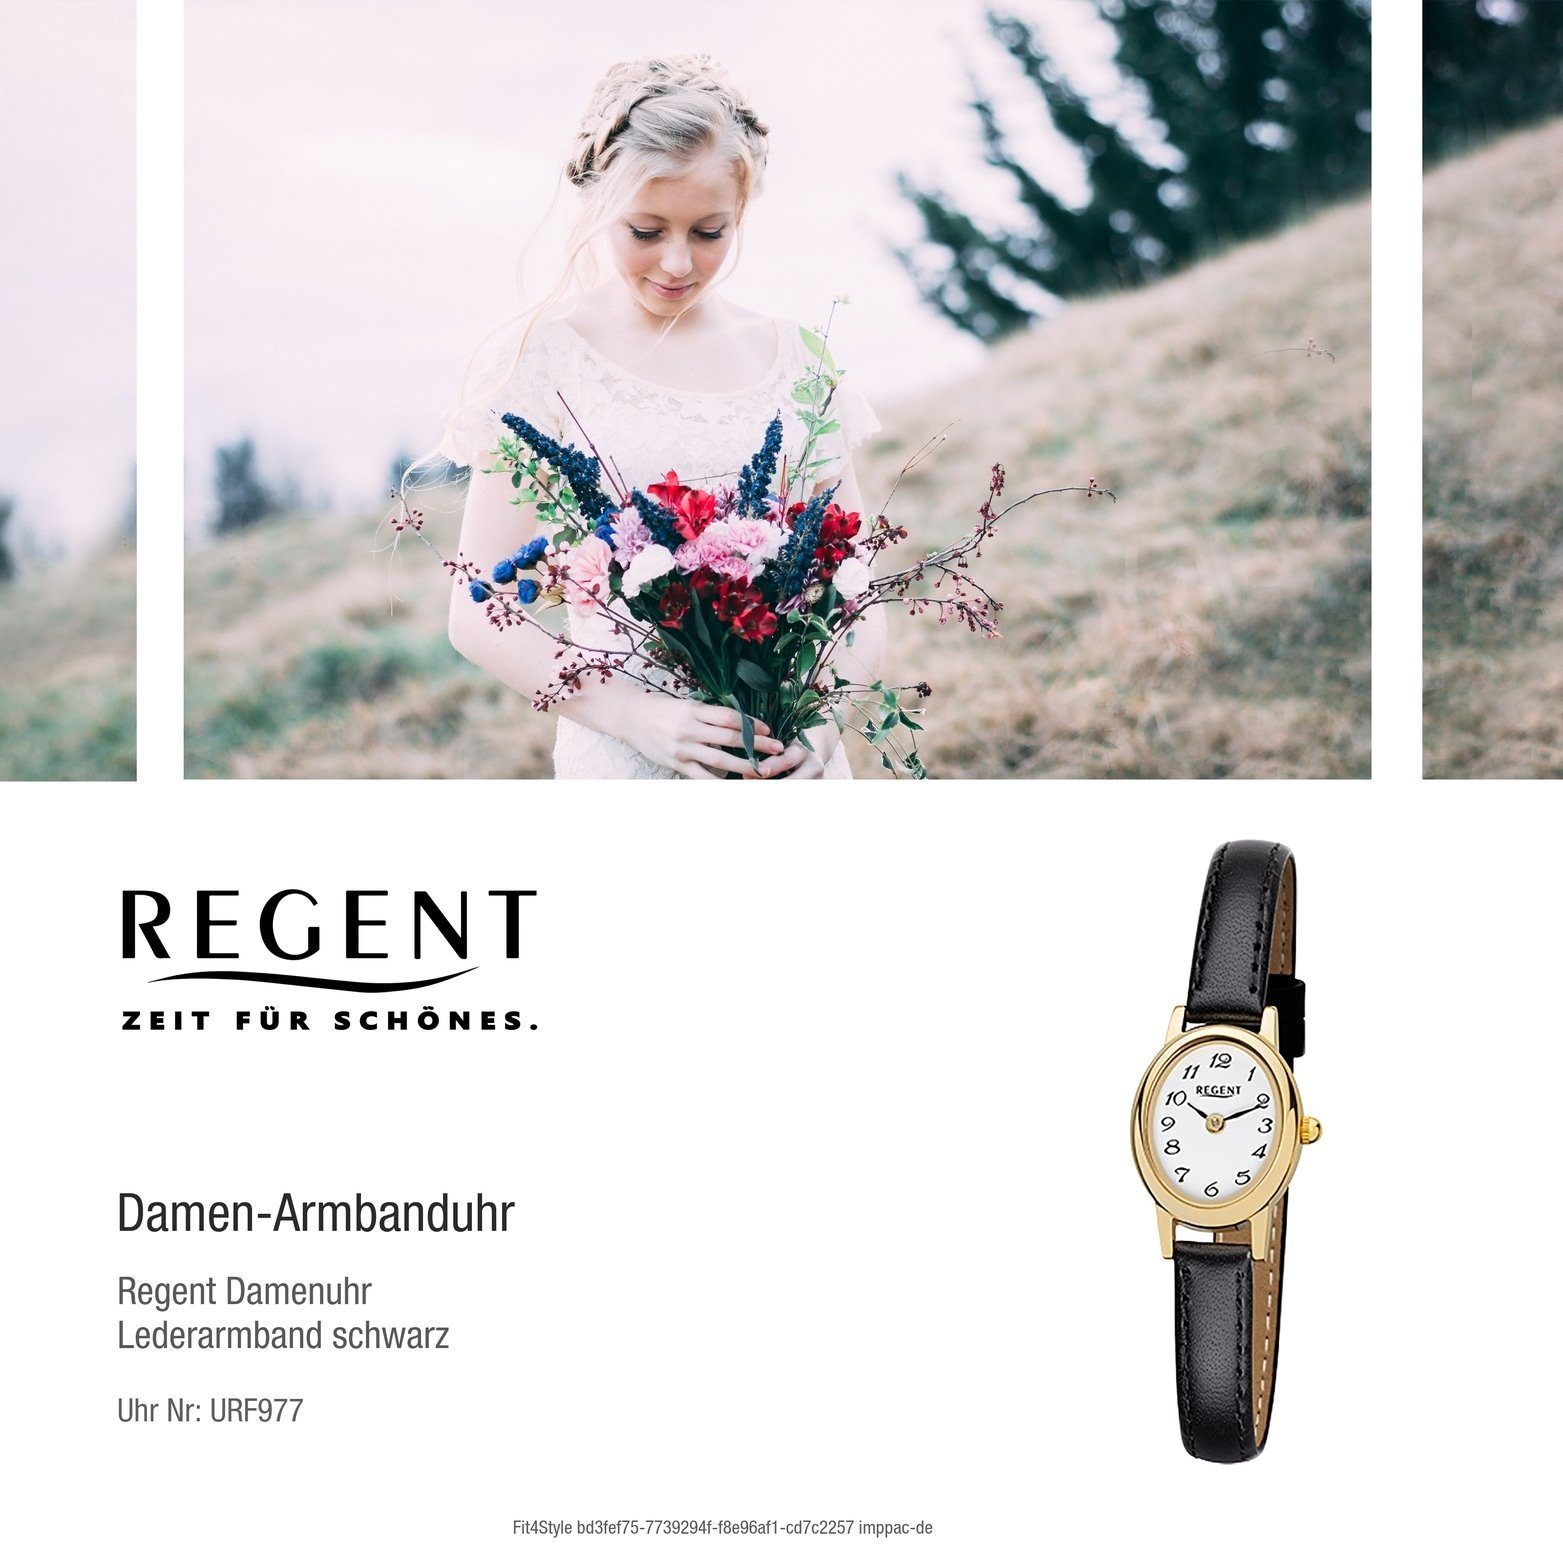 Regent Quarzuhr Regent 18x21mm), Lederarmband, Leder ovales klein Damen Gehäuse, F-977 Elegan Uhr mit Damenuhr (ca. Quarzuhr